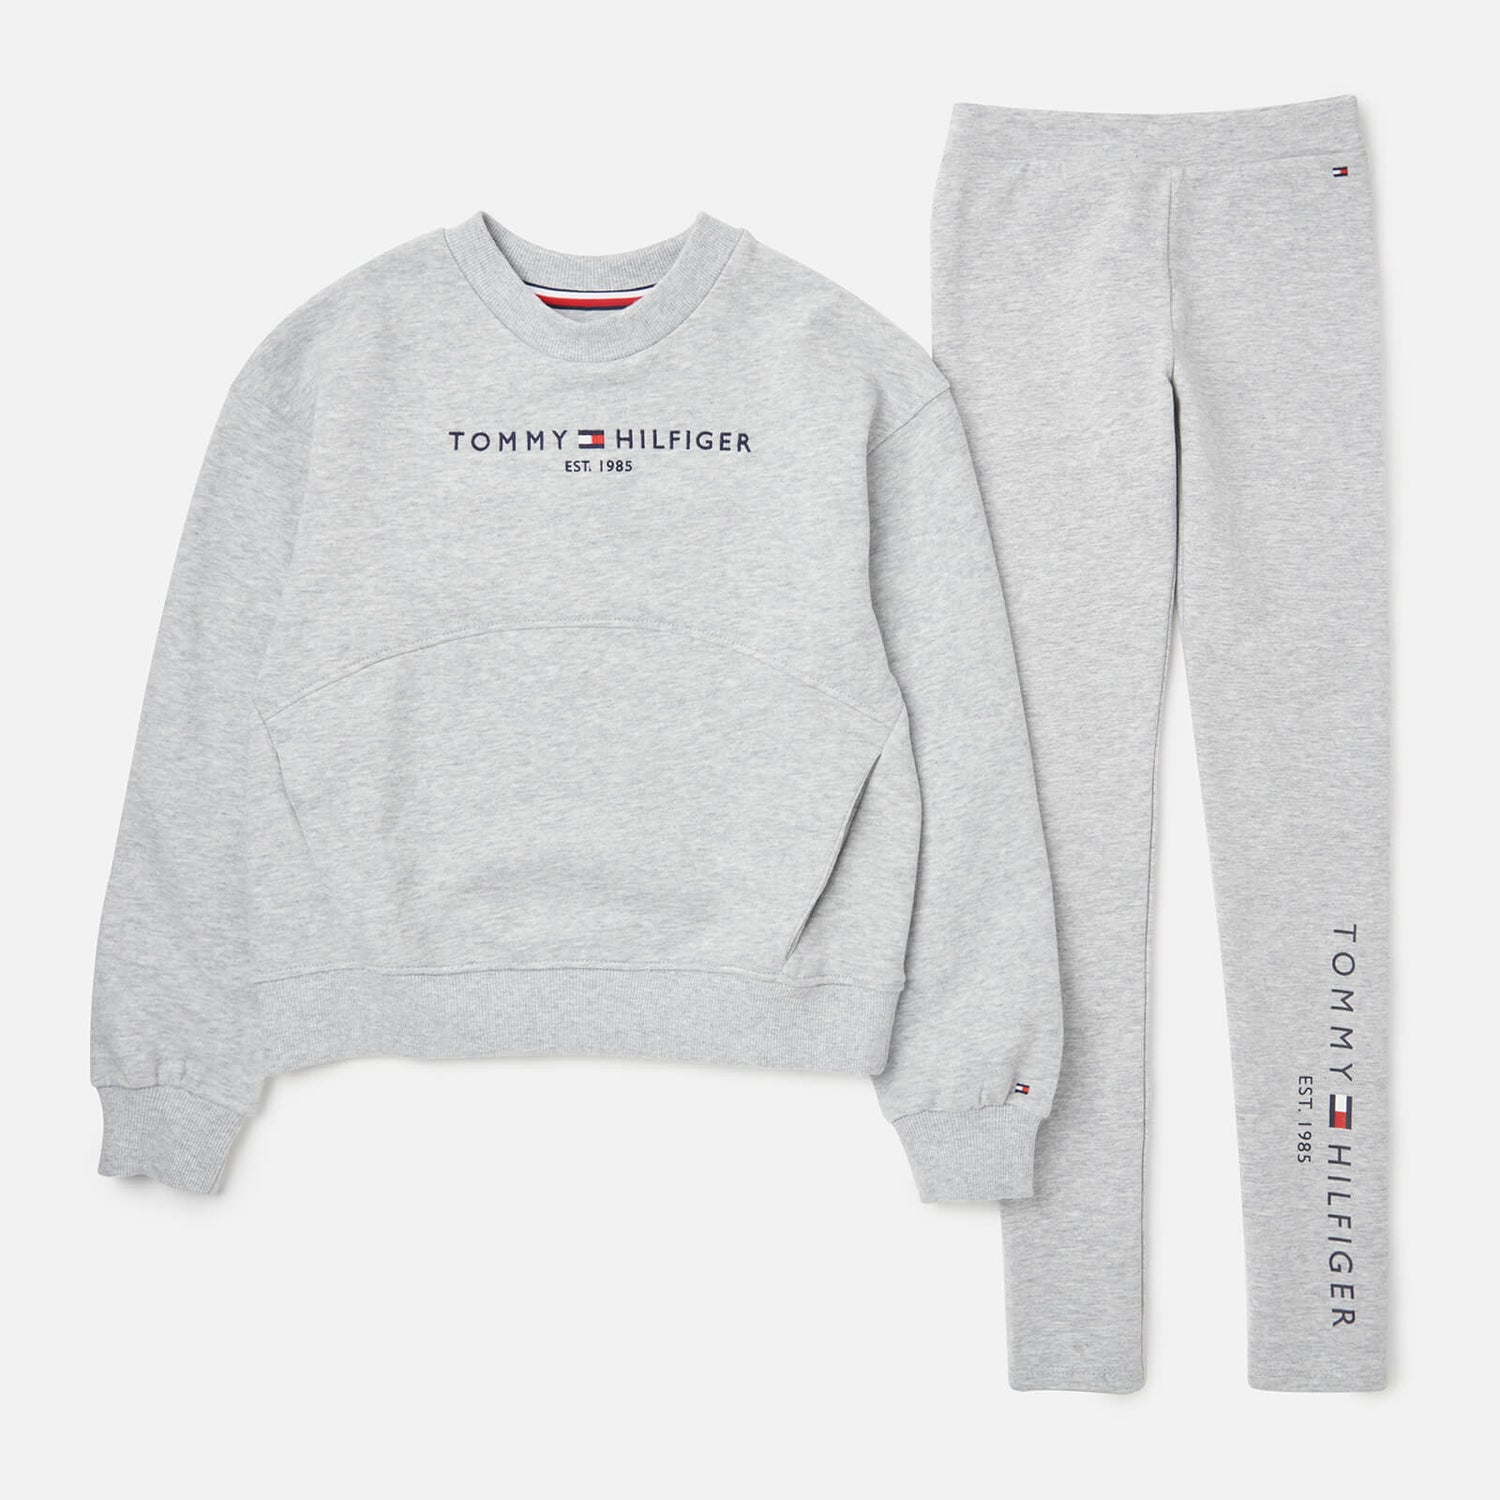 Tommy Hilfiger Girls' Essential Sweatshirt and Leggings Set - Grey Heather